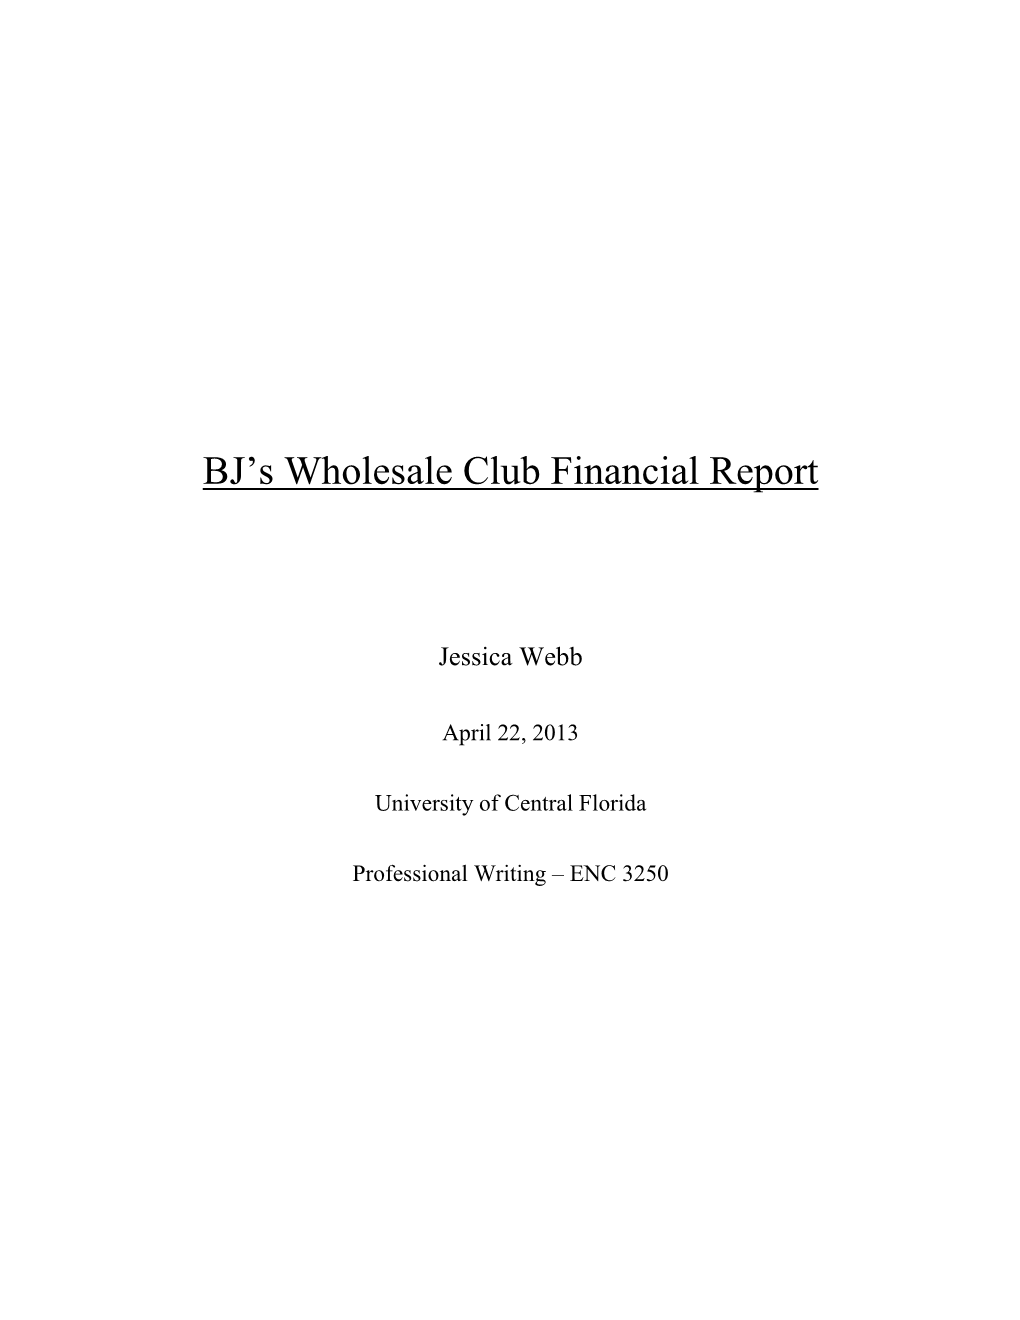 BJ's Wholesale Club Financial Report